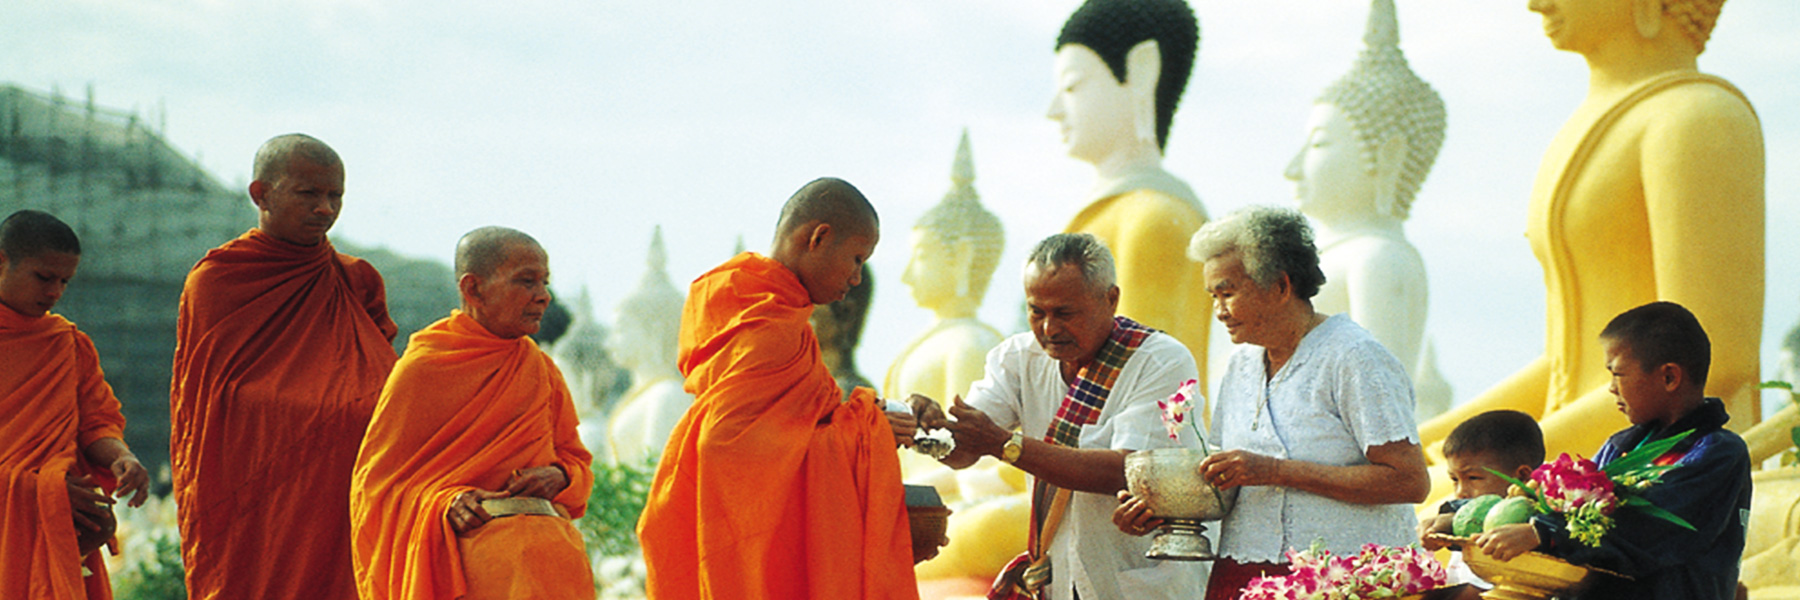 Learning Adventures - Dr Steven Andrew Martin - Photo Journals - Buddhism - International Education Online